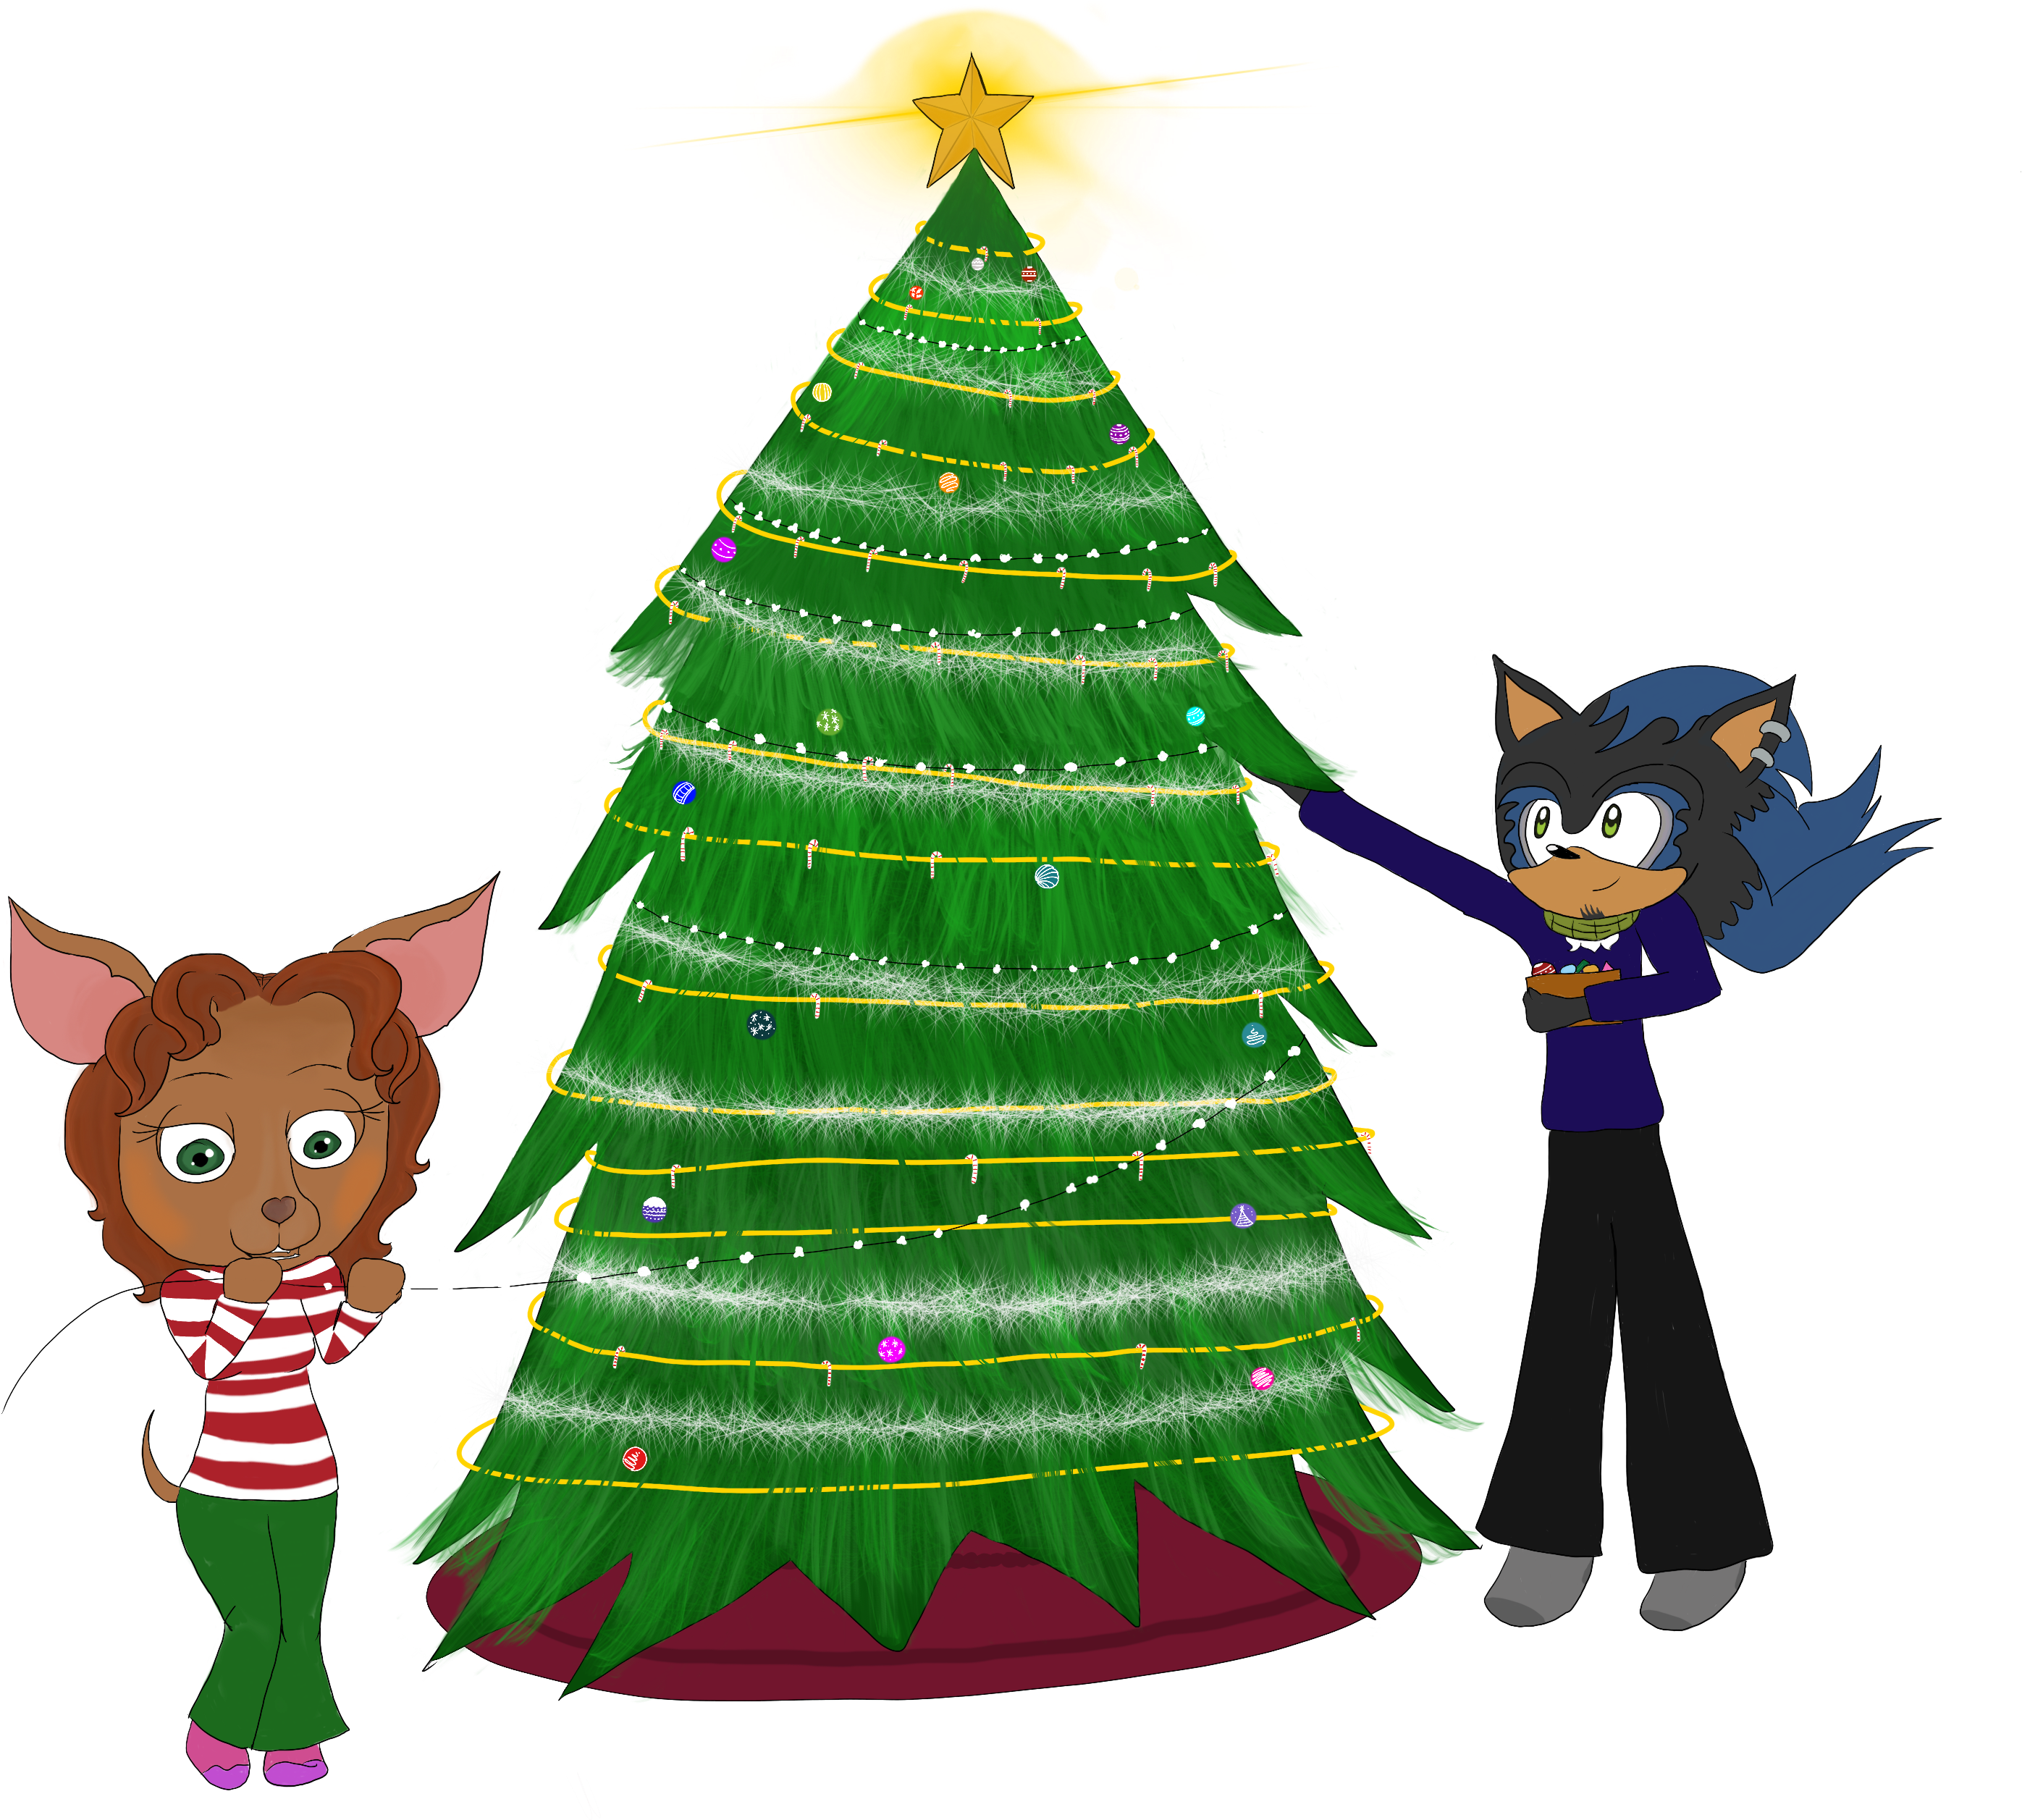 Contest Entry - Christmas Tree (3461x2813)